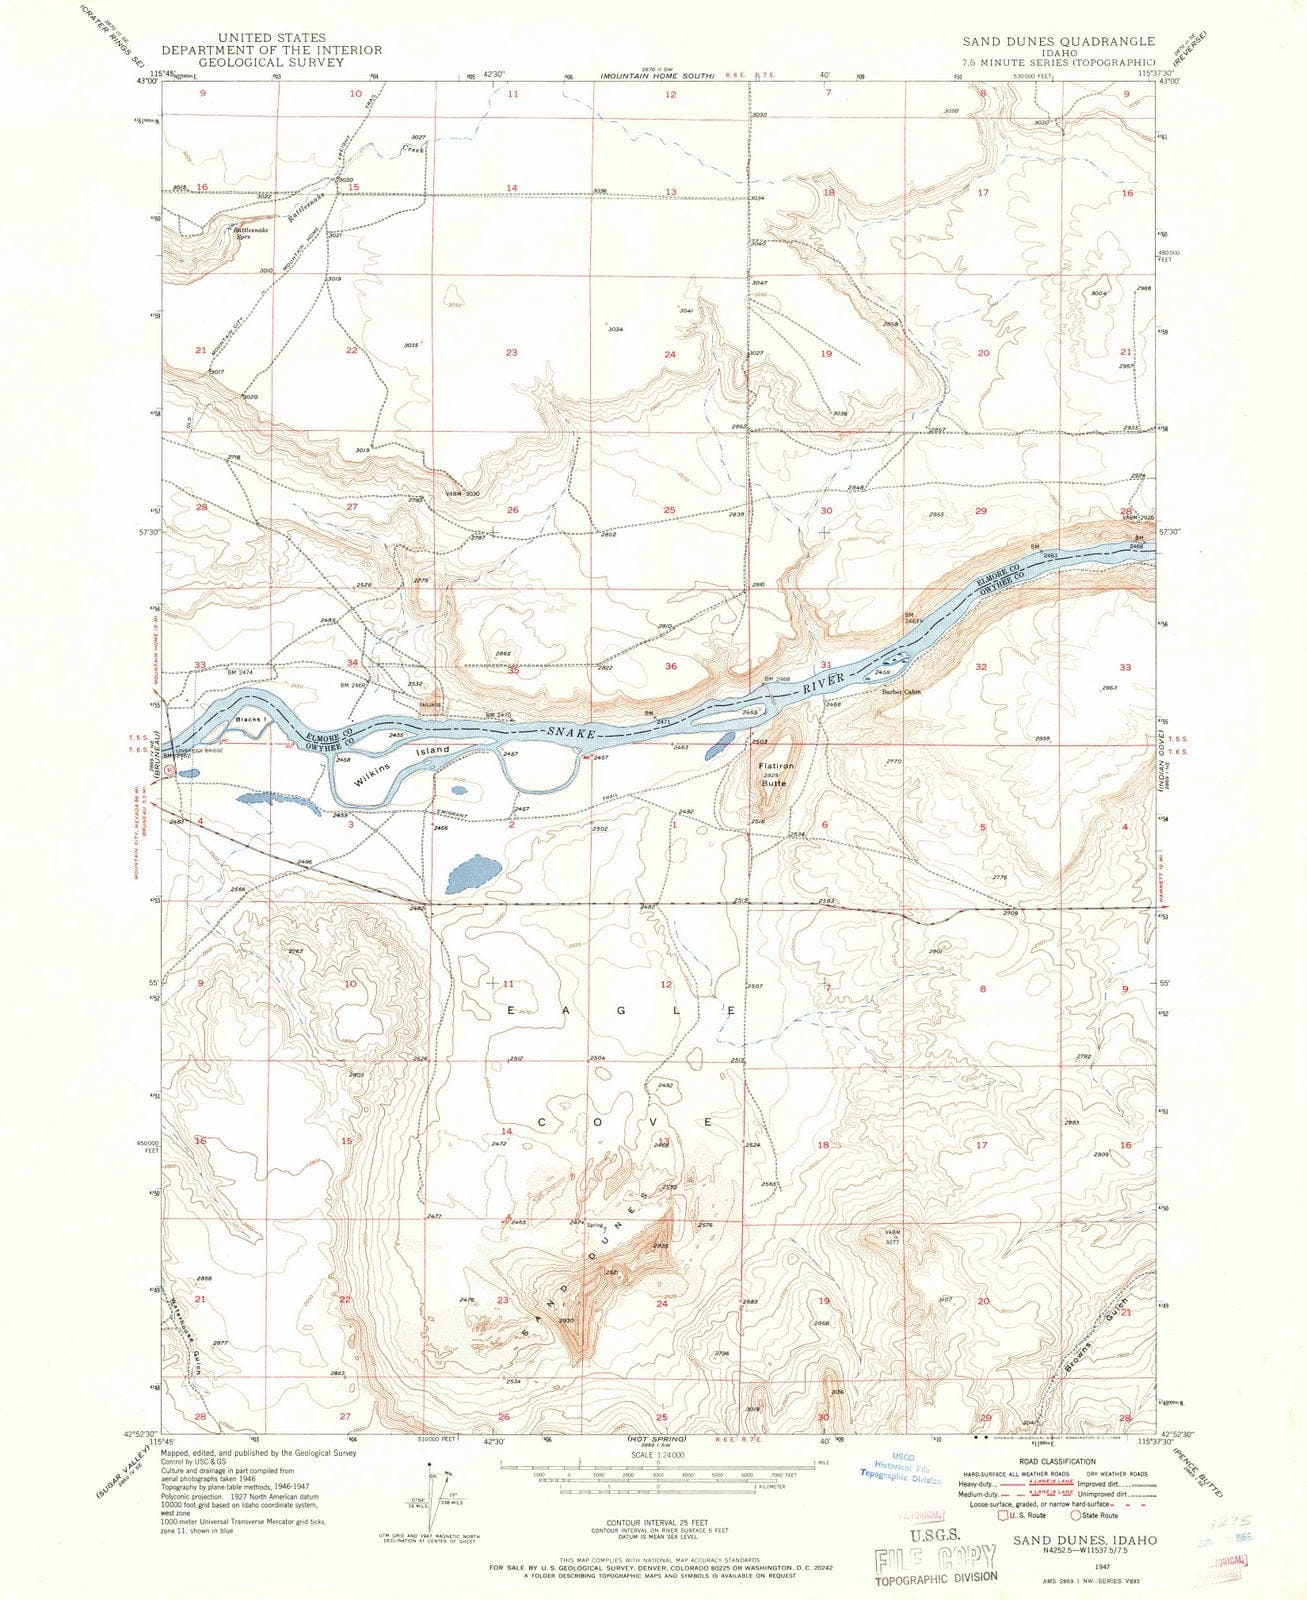 1947 Sandunes, ID - Idaho - USGS Topographic Map